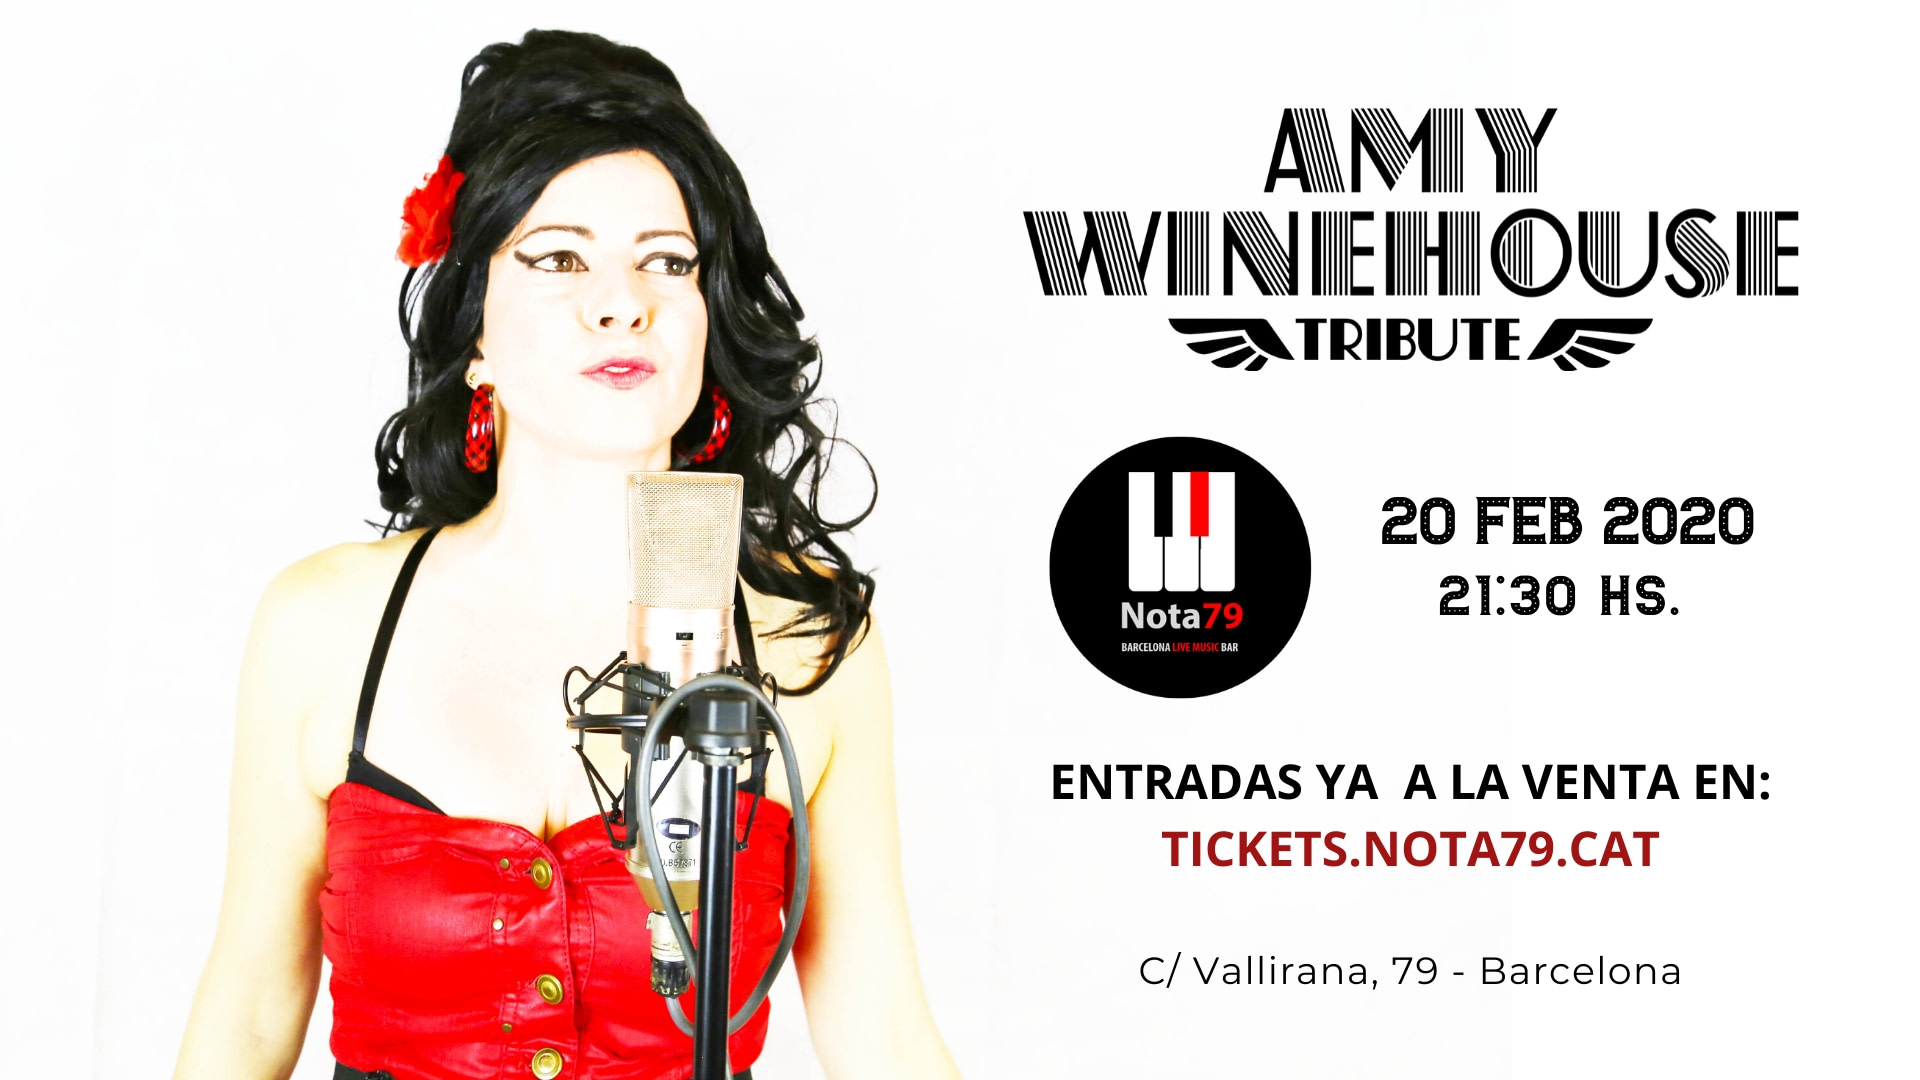 Amy Winehouse Tribute - Aly Alma